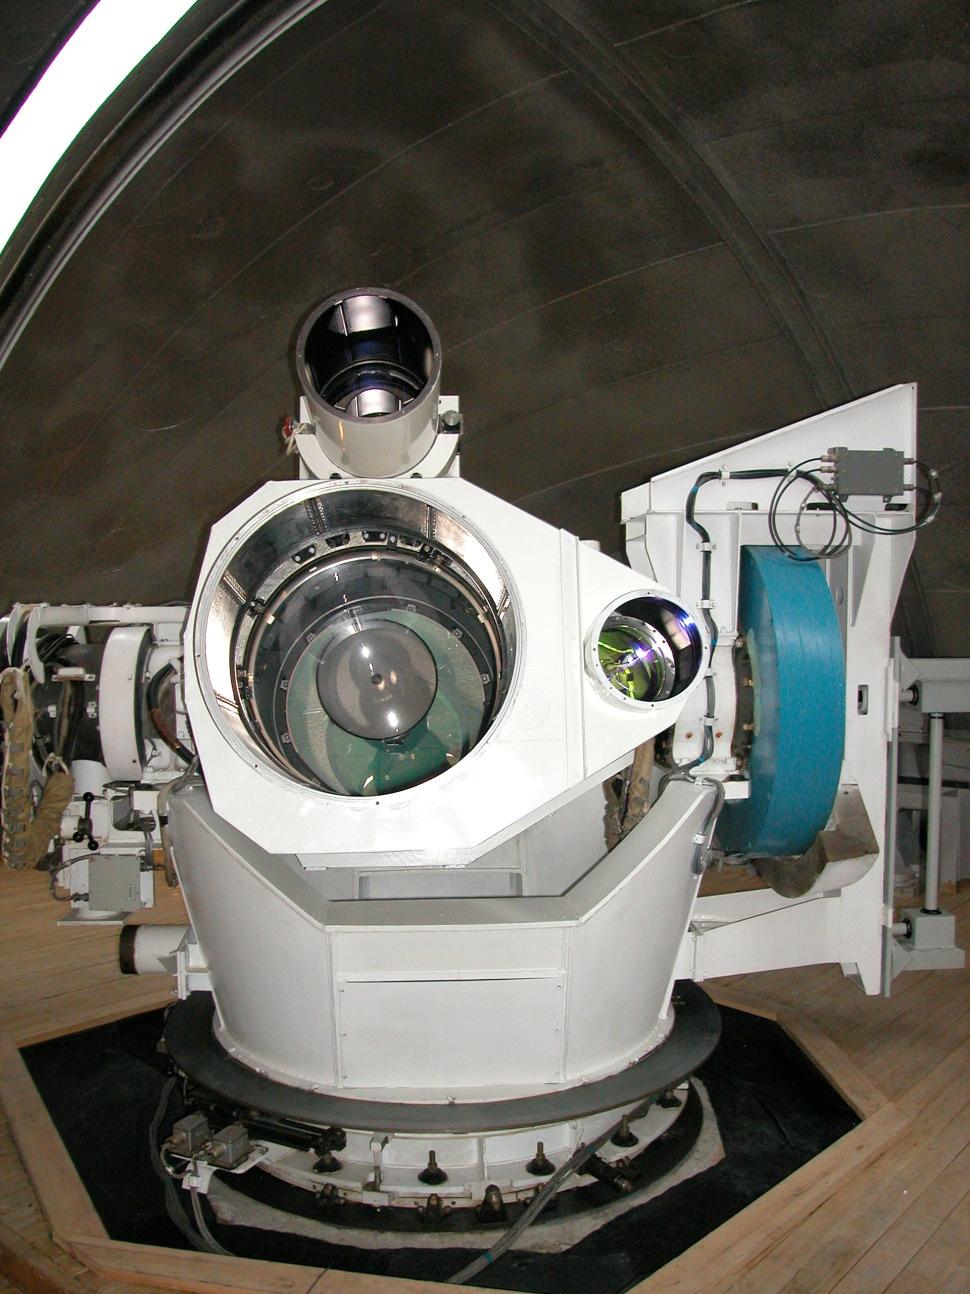 AOLC. Telescope overview Dome fold Wide-field lens dia. 350 mm, FOV 6.25 sq.